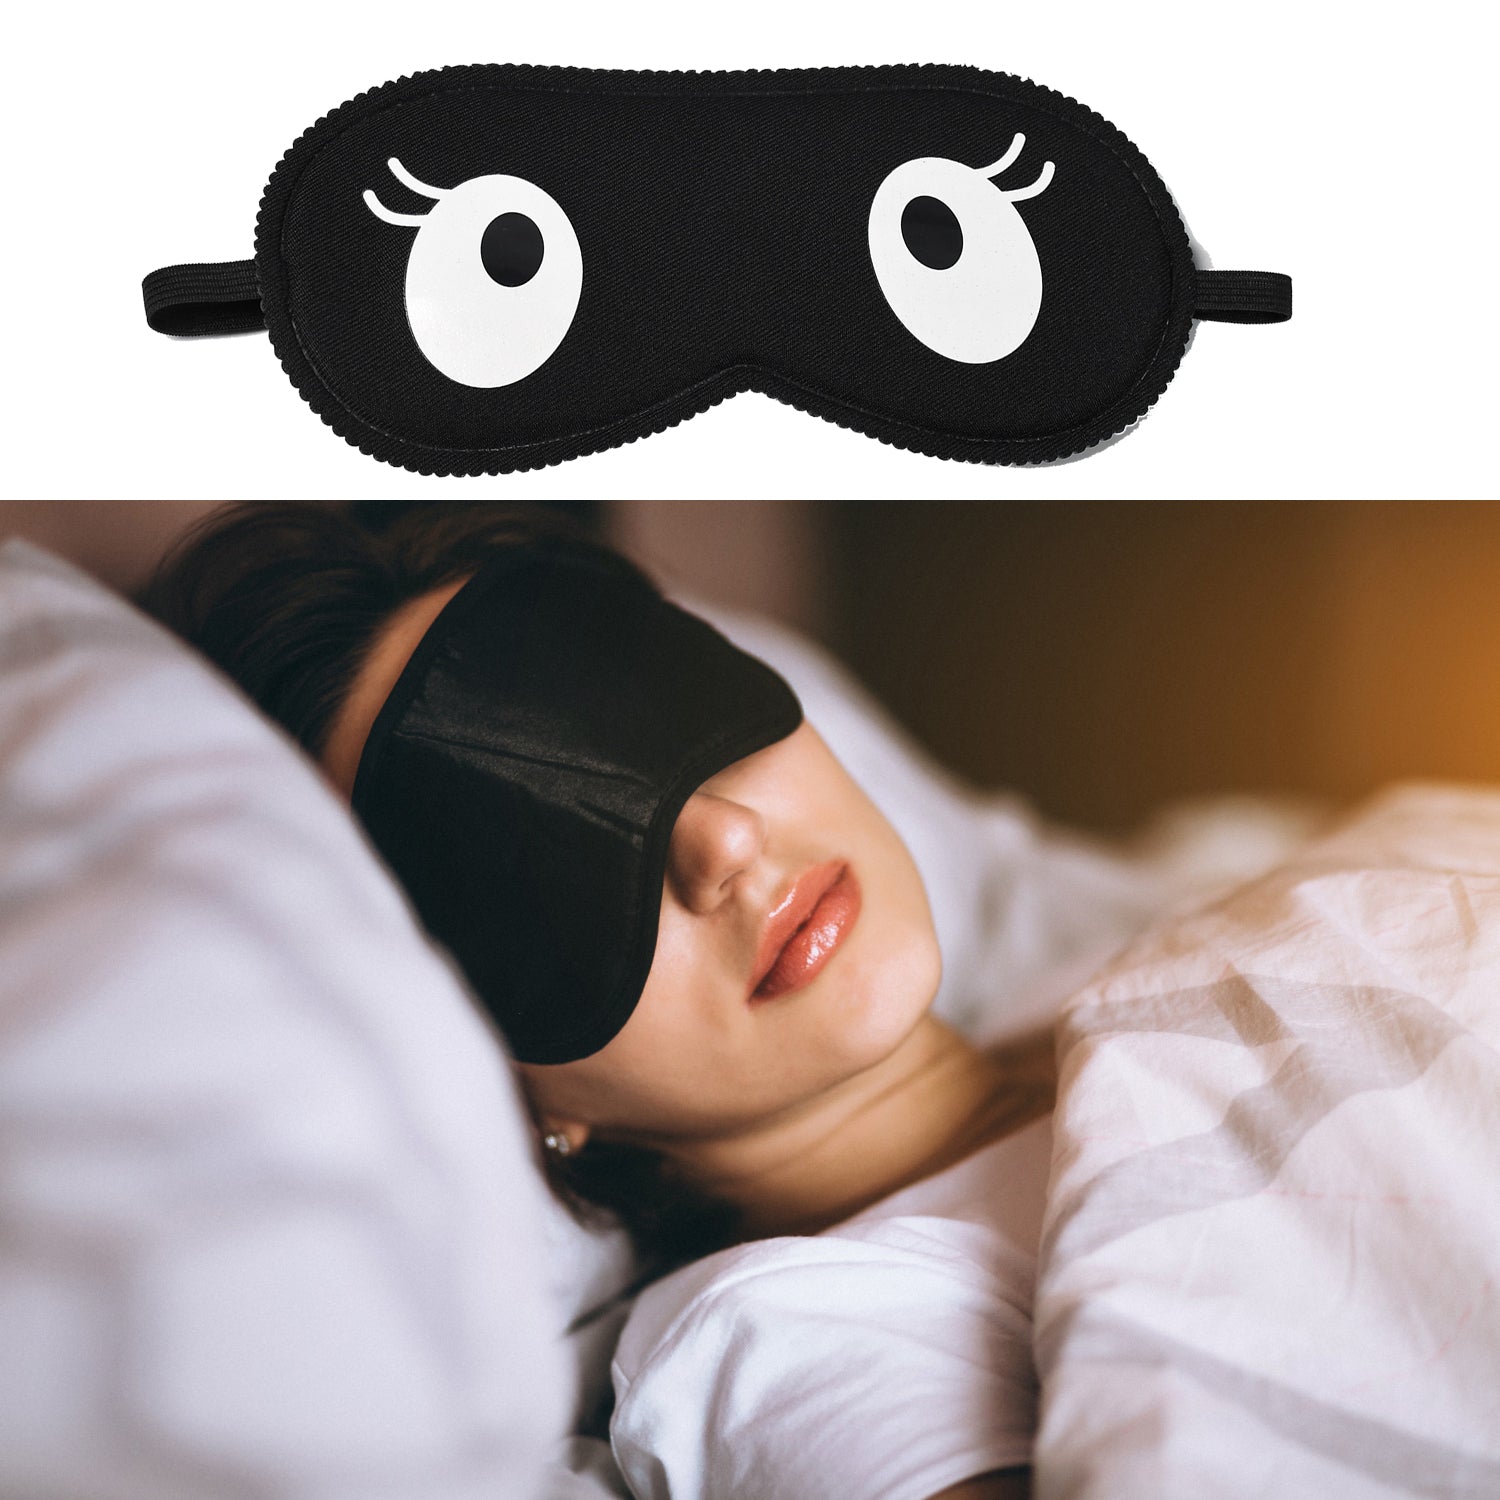 7363 Sleeping Mask Lightweight Cotton Fabric Blindfold Soft Eye Mask Super New Premium Eye Mask (1 Pc) DeoDap